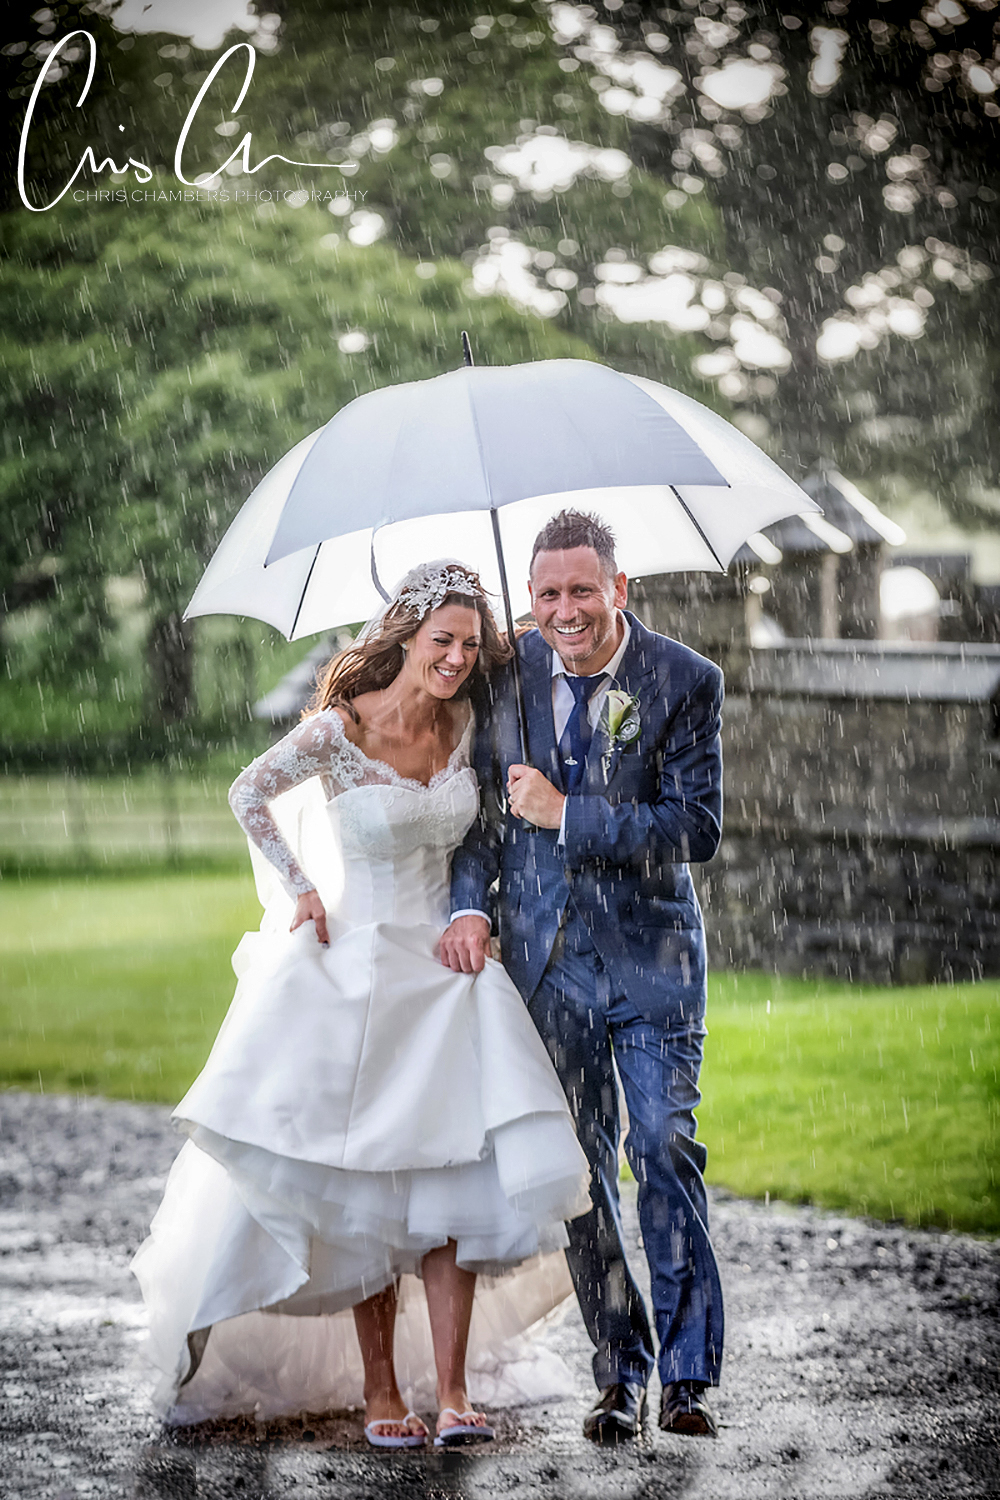 Wet wedding photography tips - Allerton Castle